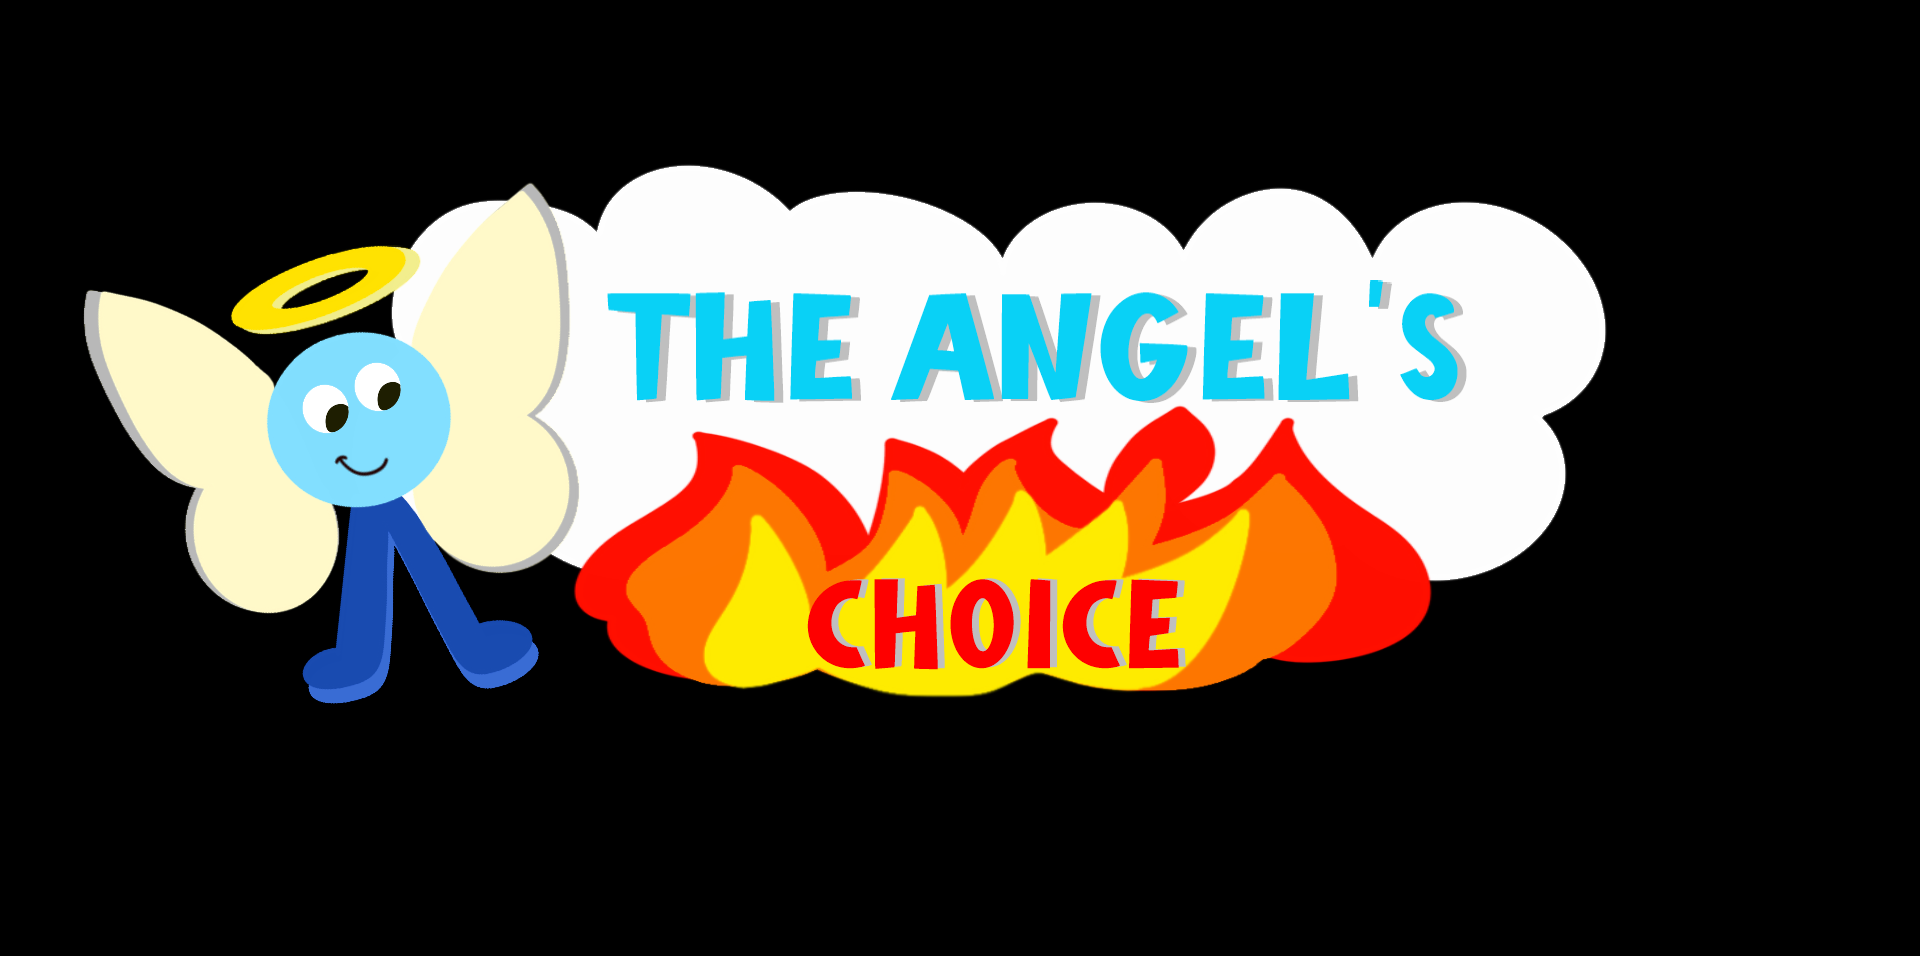 The Angel's choice